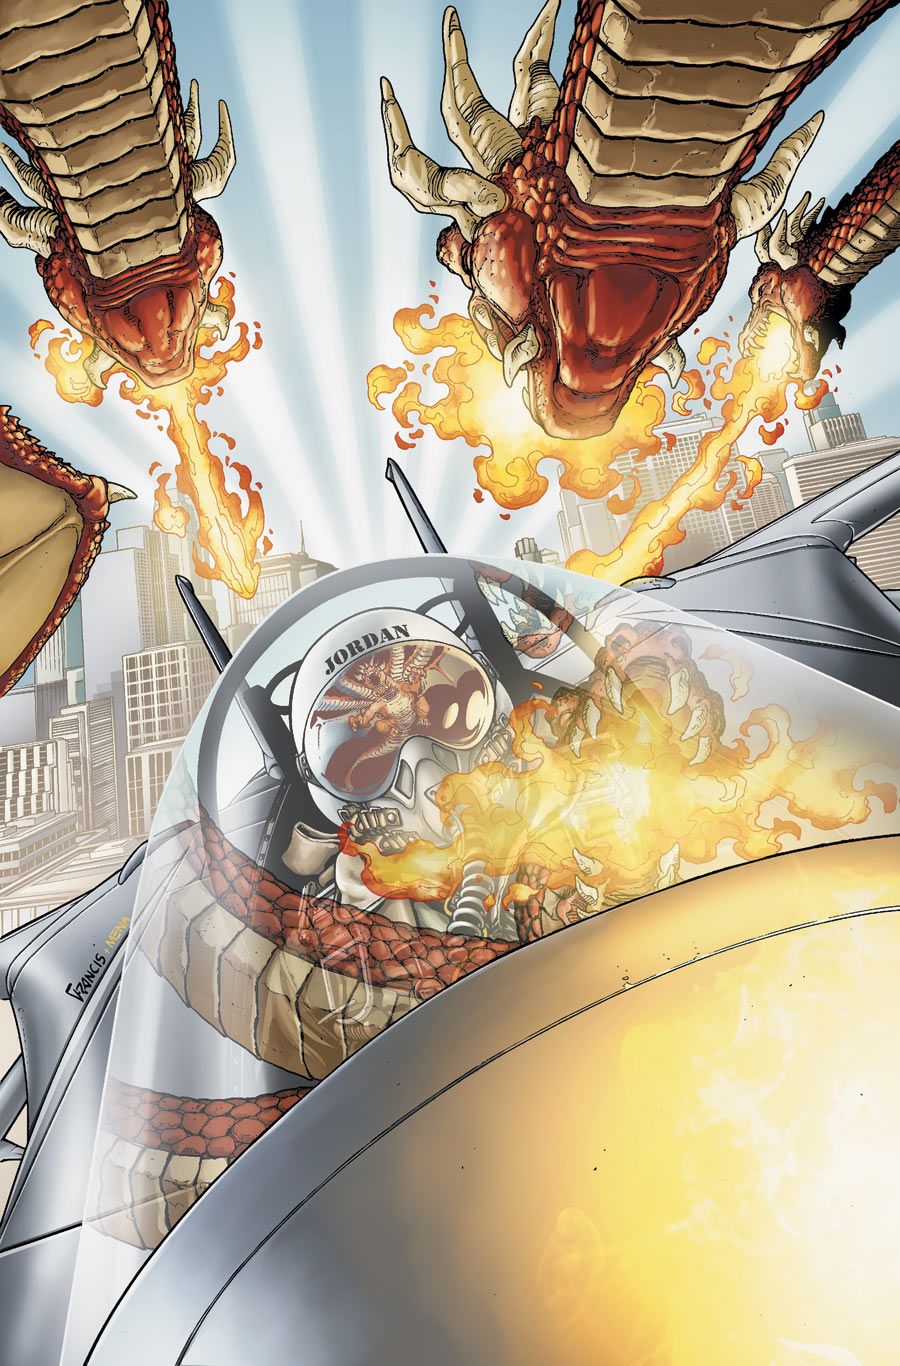 Flashpoint: Hal Jordan #2